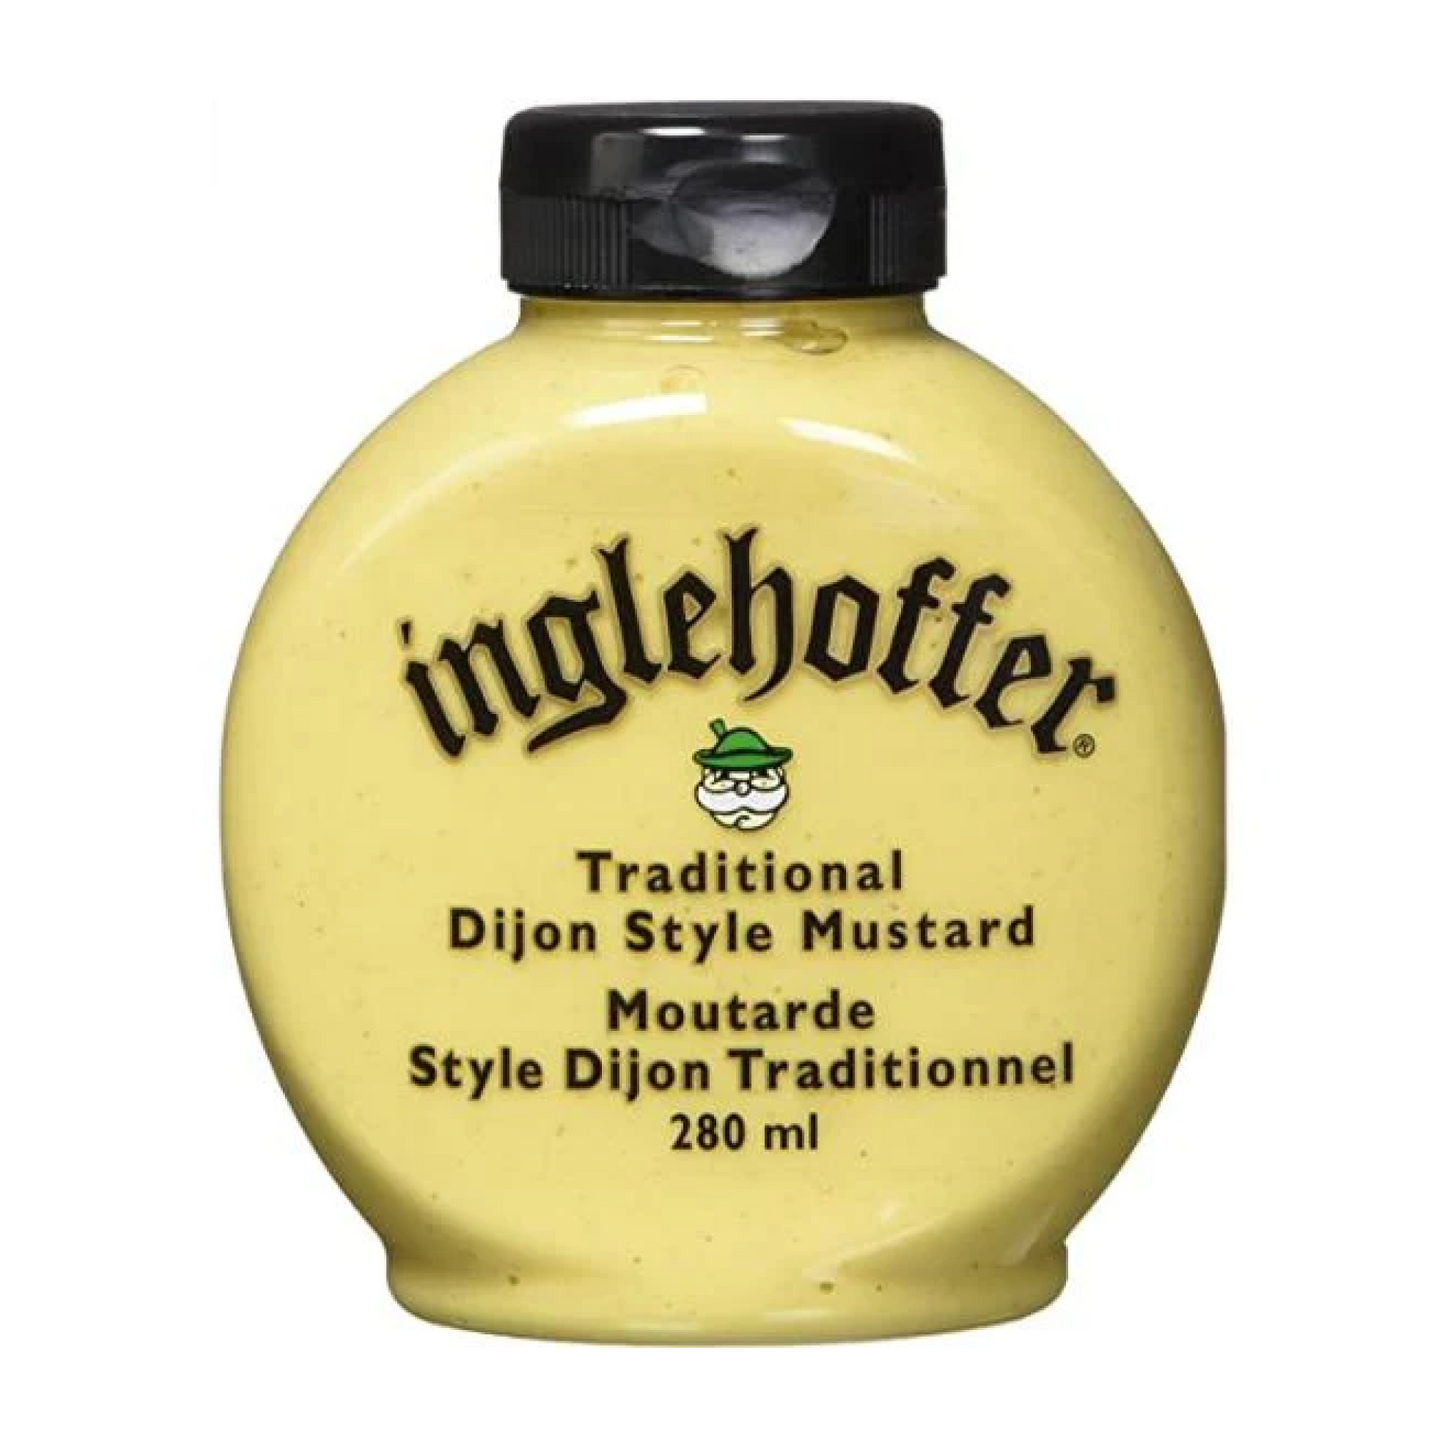 Ingelhoffer Traditional Dijon Style Mustard 280ml